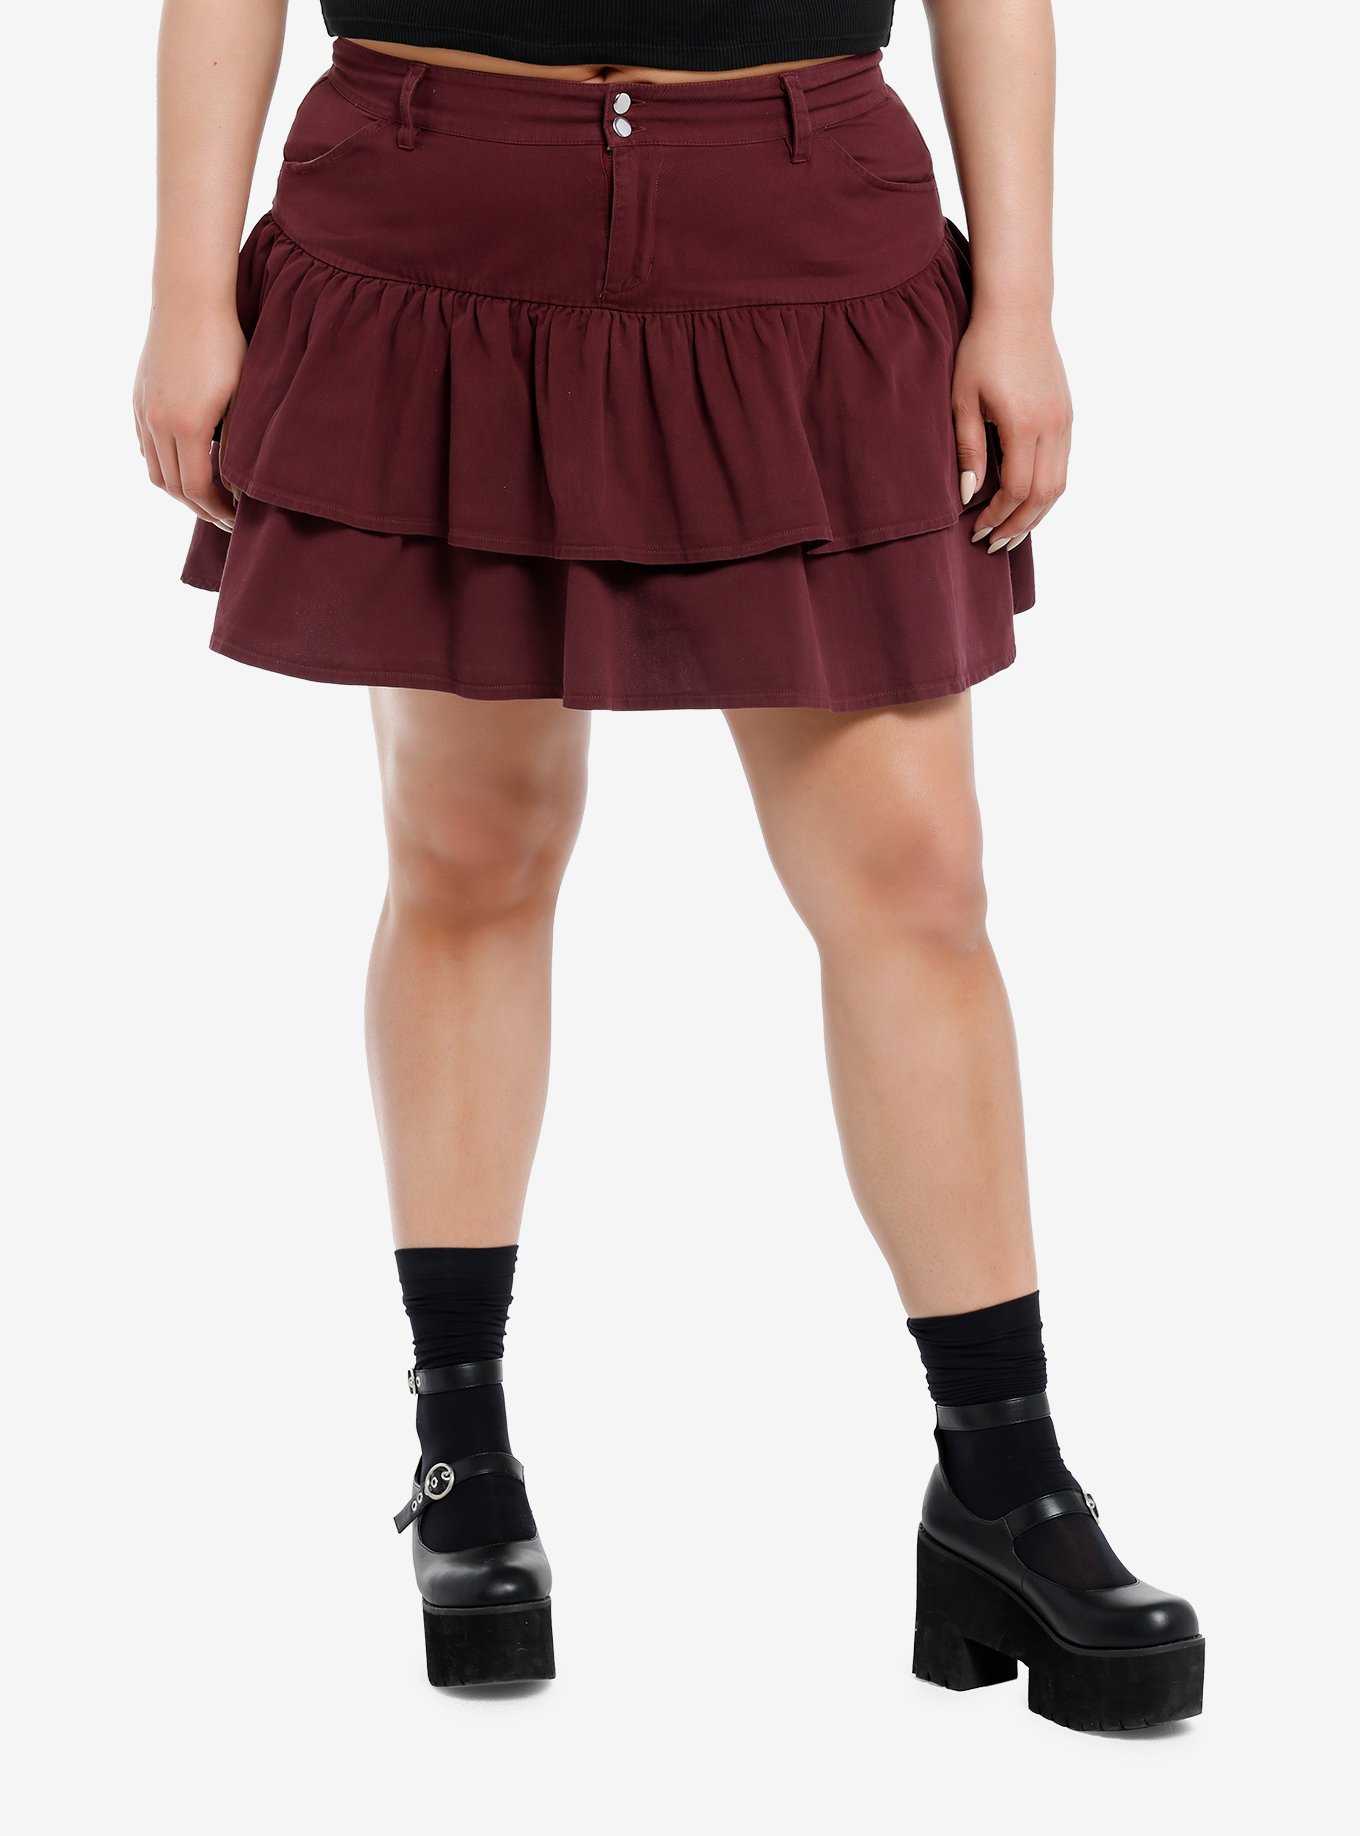 Plus Size Black Skirt, Women's Plus Size Skirts - See Rose Go